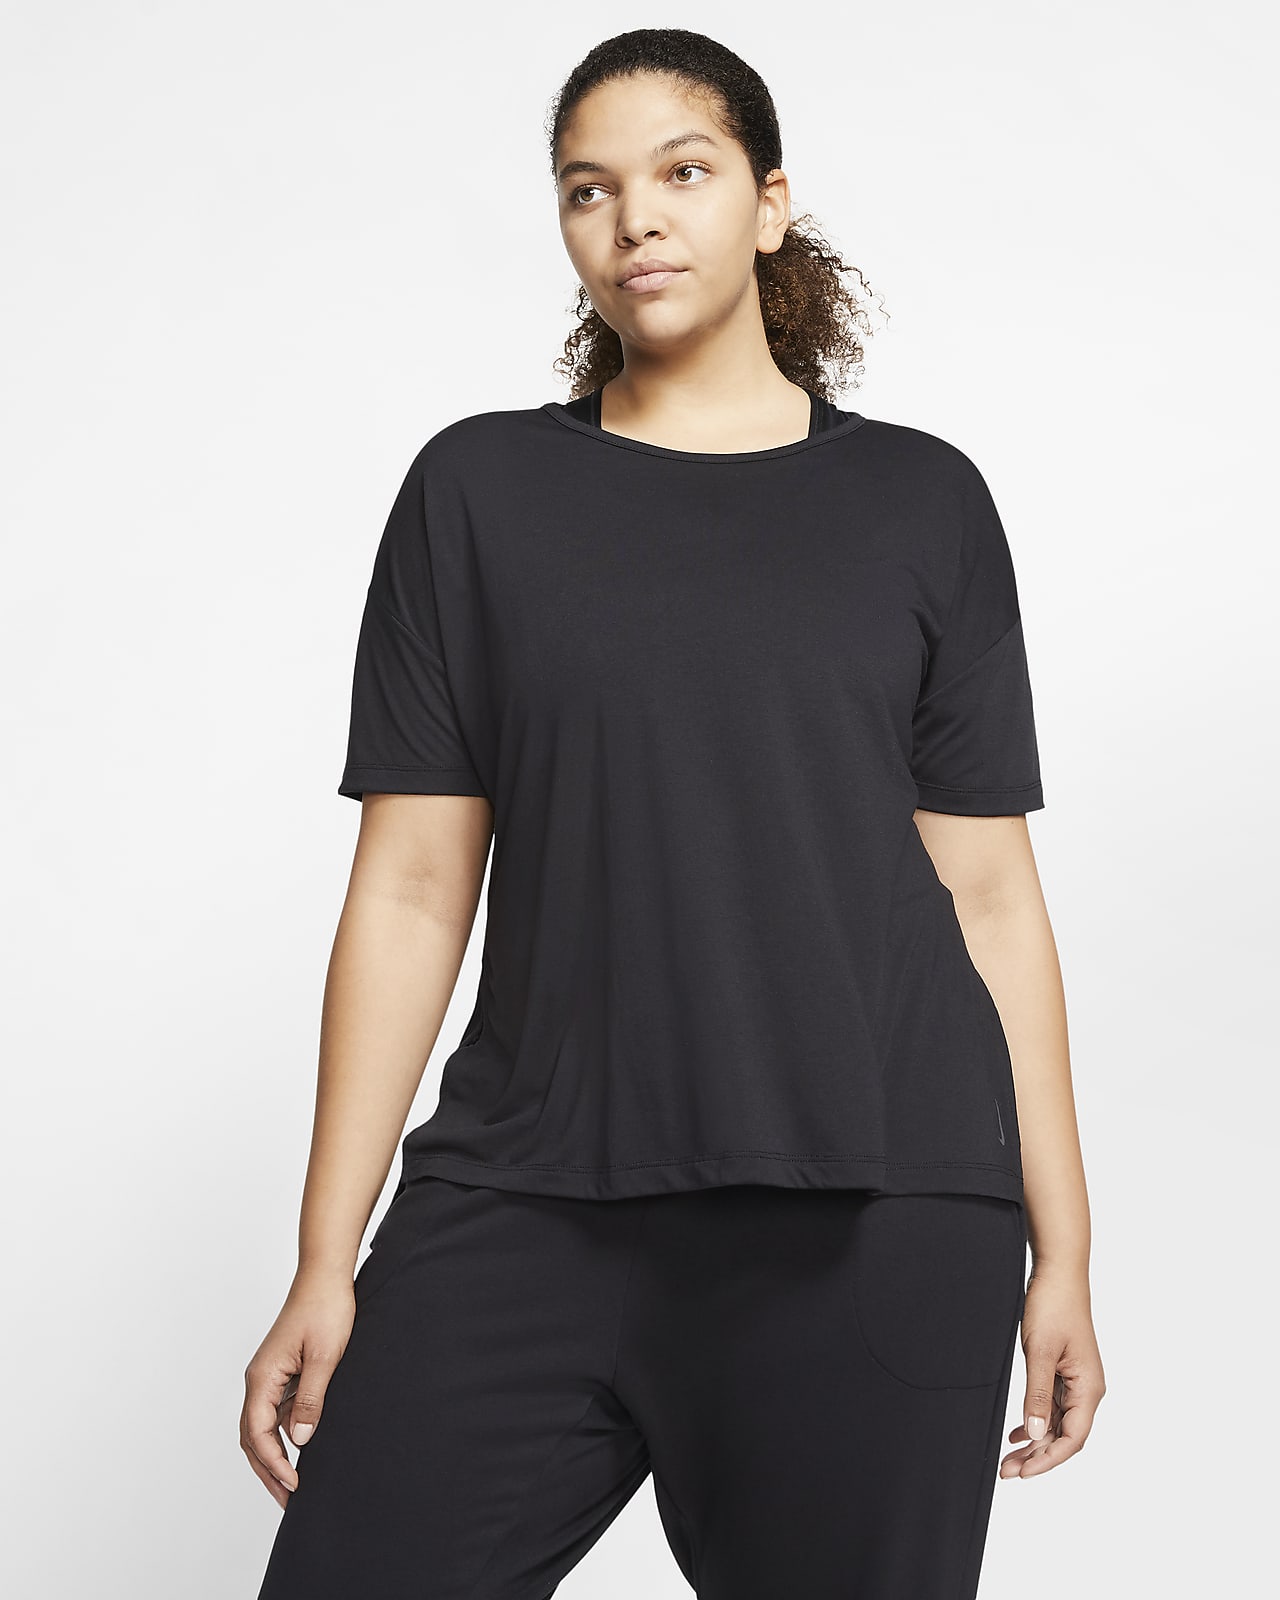 Nike Yoga Women's Short-Sleeve Top (Plus Size)